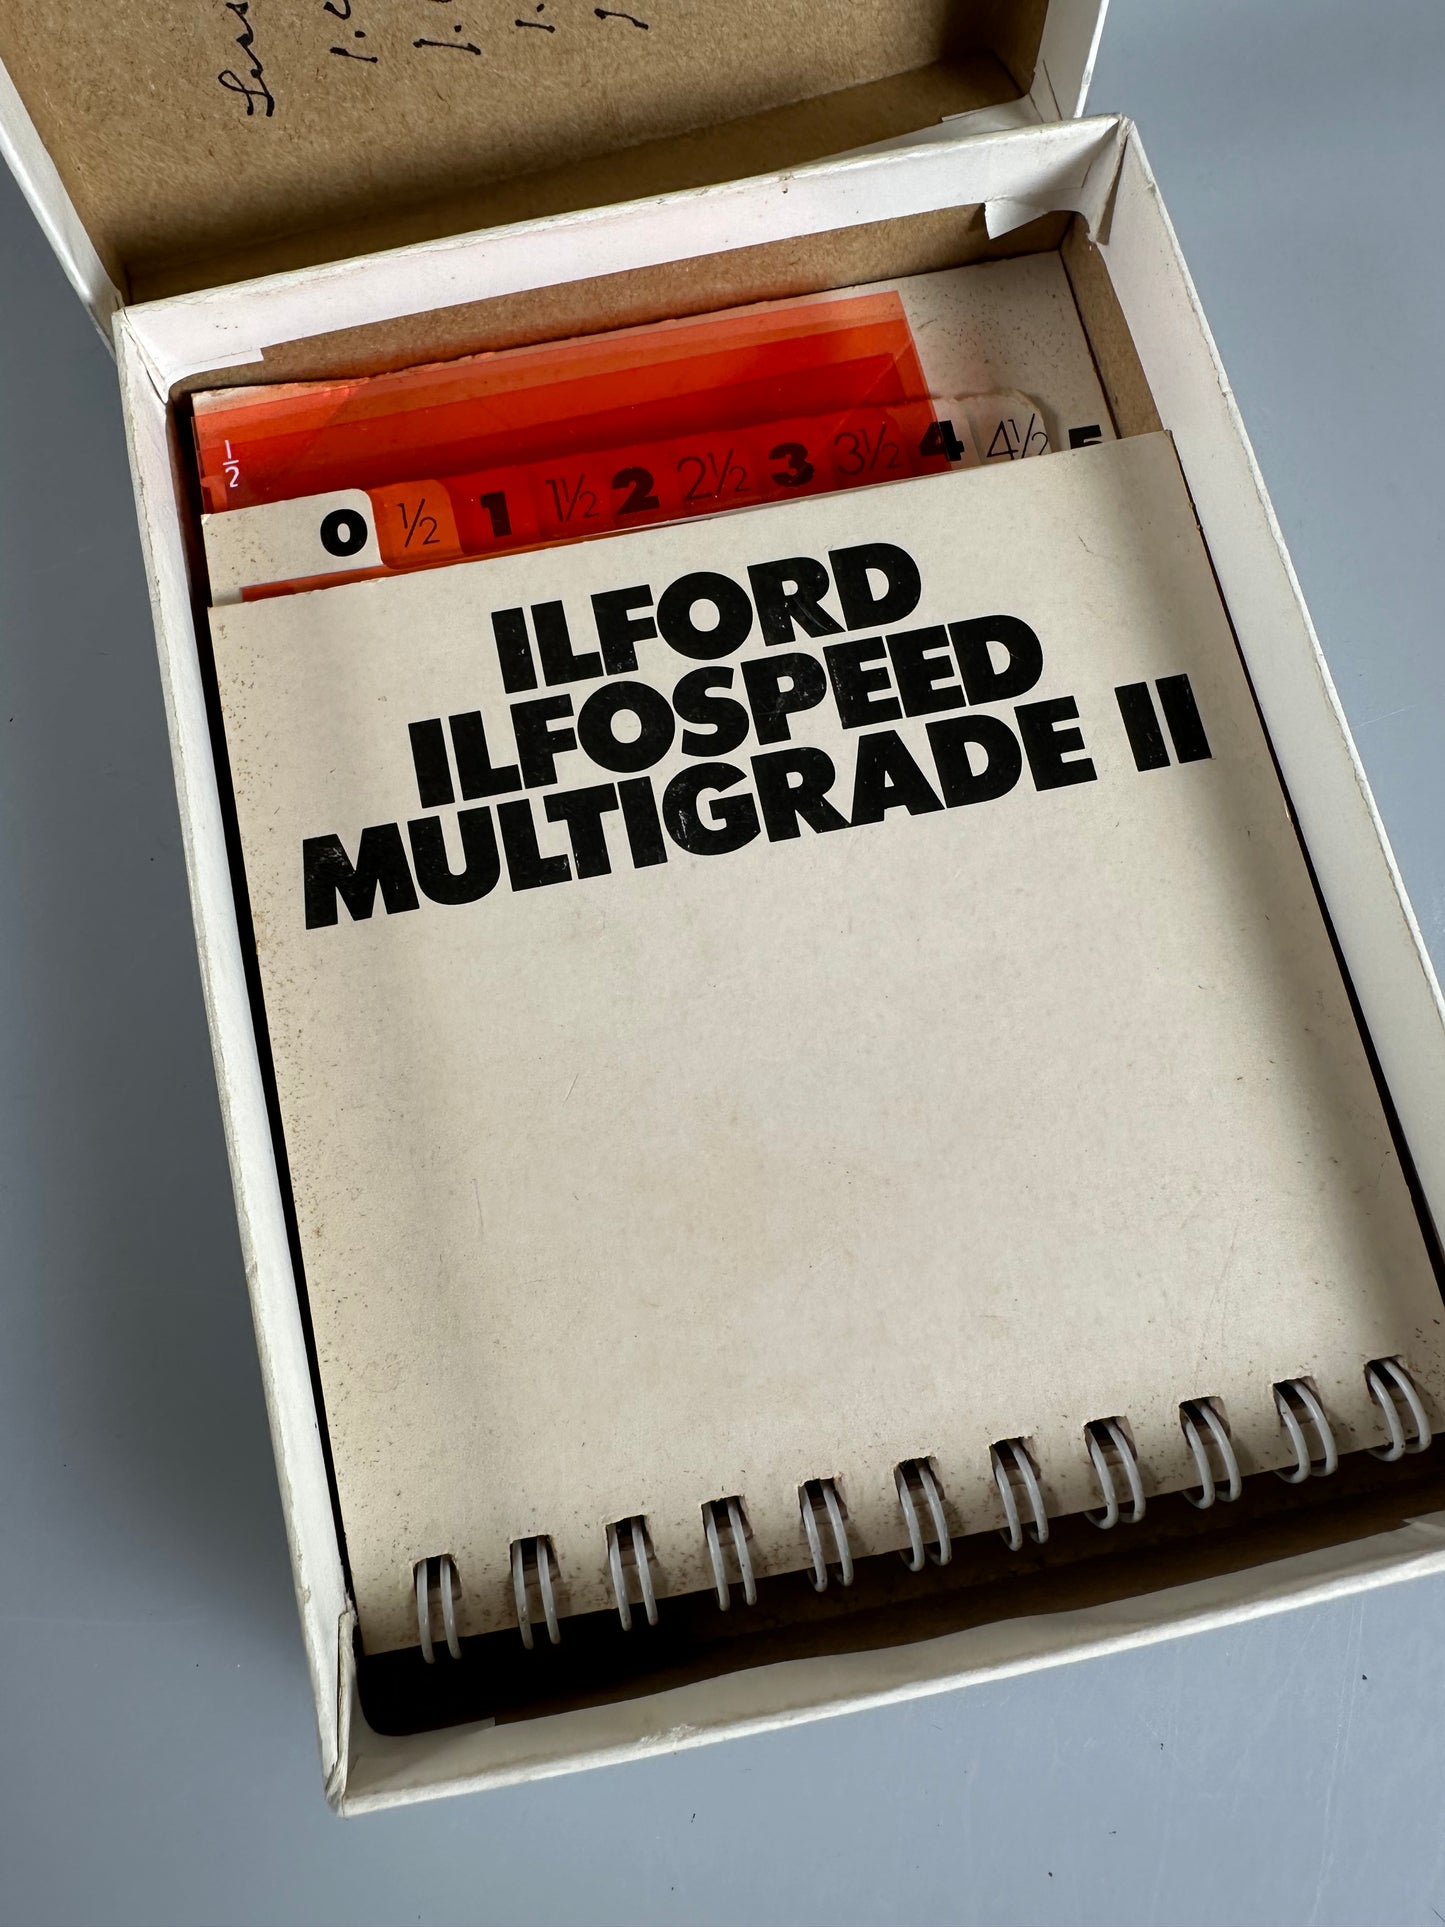 Ilford Multigrade II filter set Contrast Filters 3 1/2 x 3 1/2